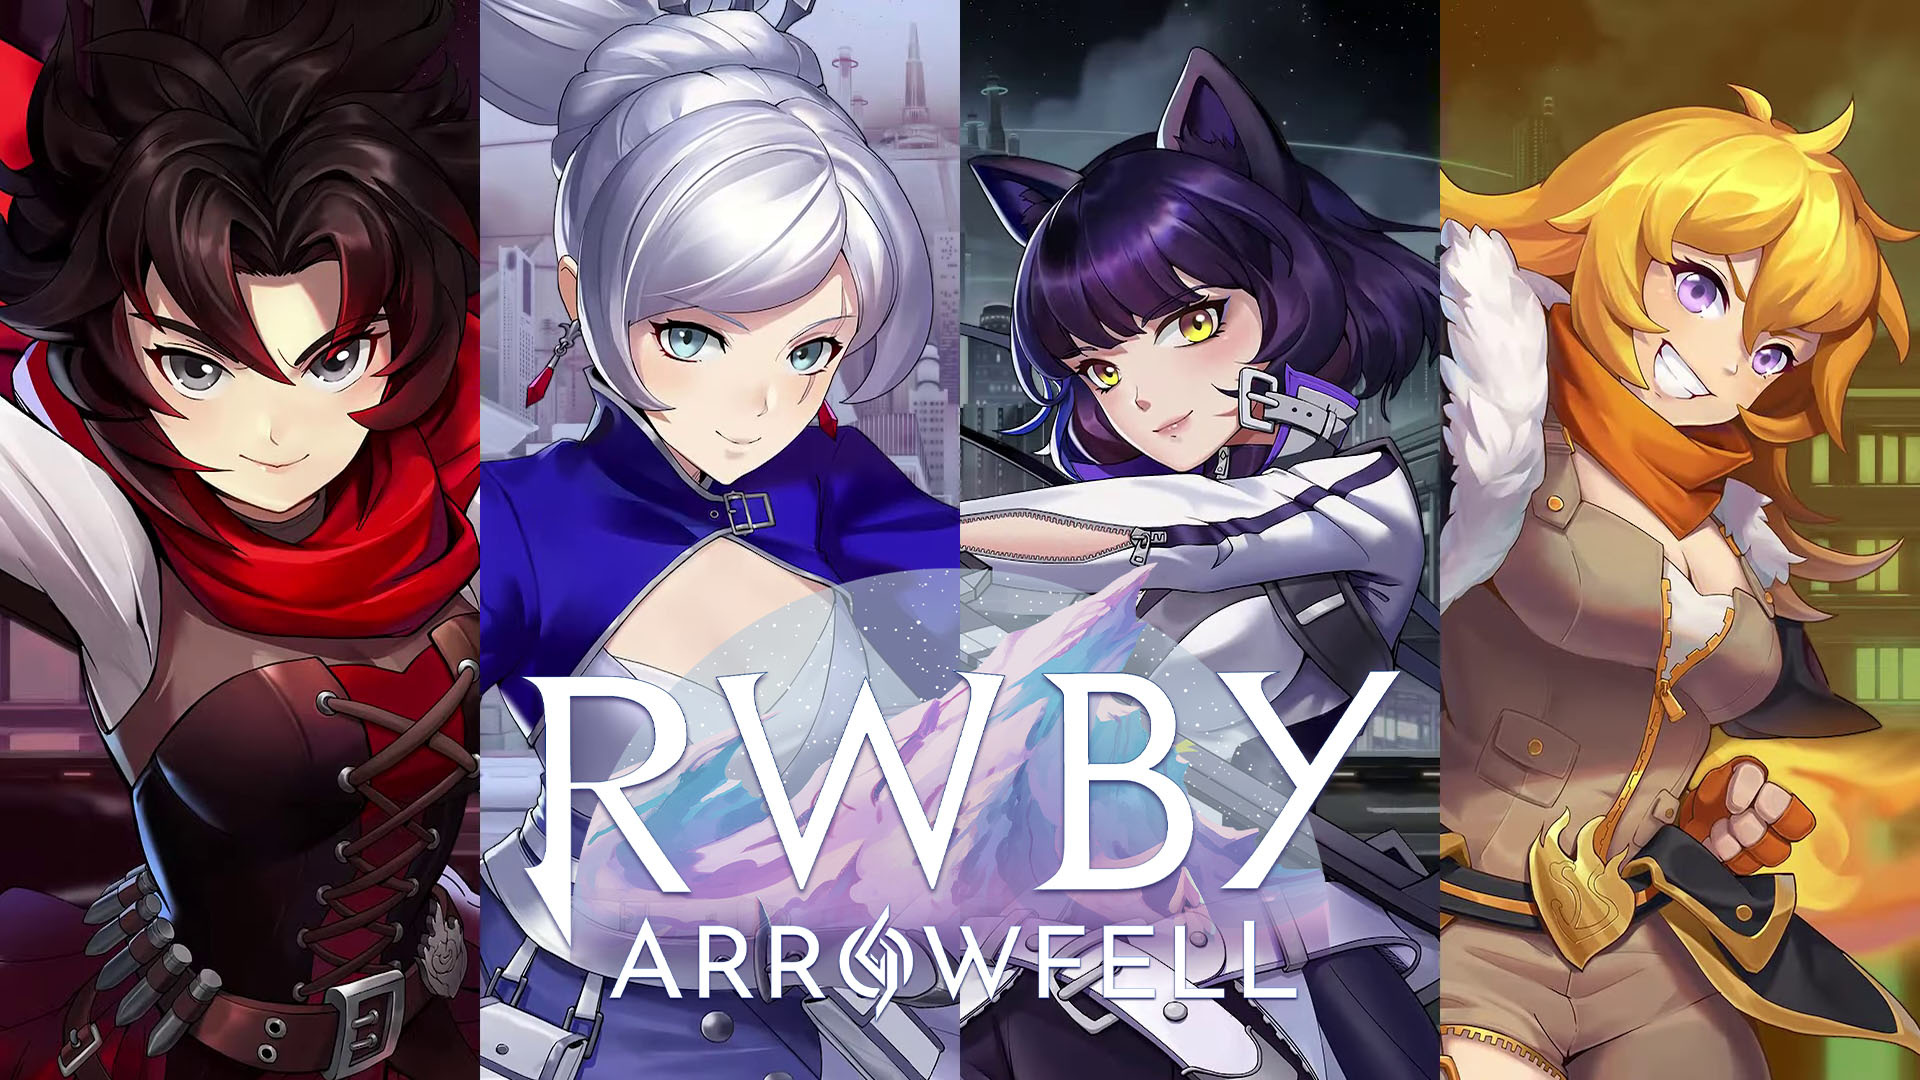 RWBY Arrowfell, Gameplay trailer, Screenshots, Upcoming launch, Fall release, 1920x1080 Full HD Desktop